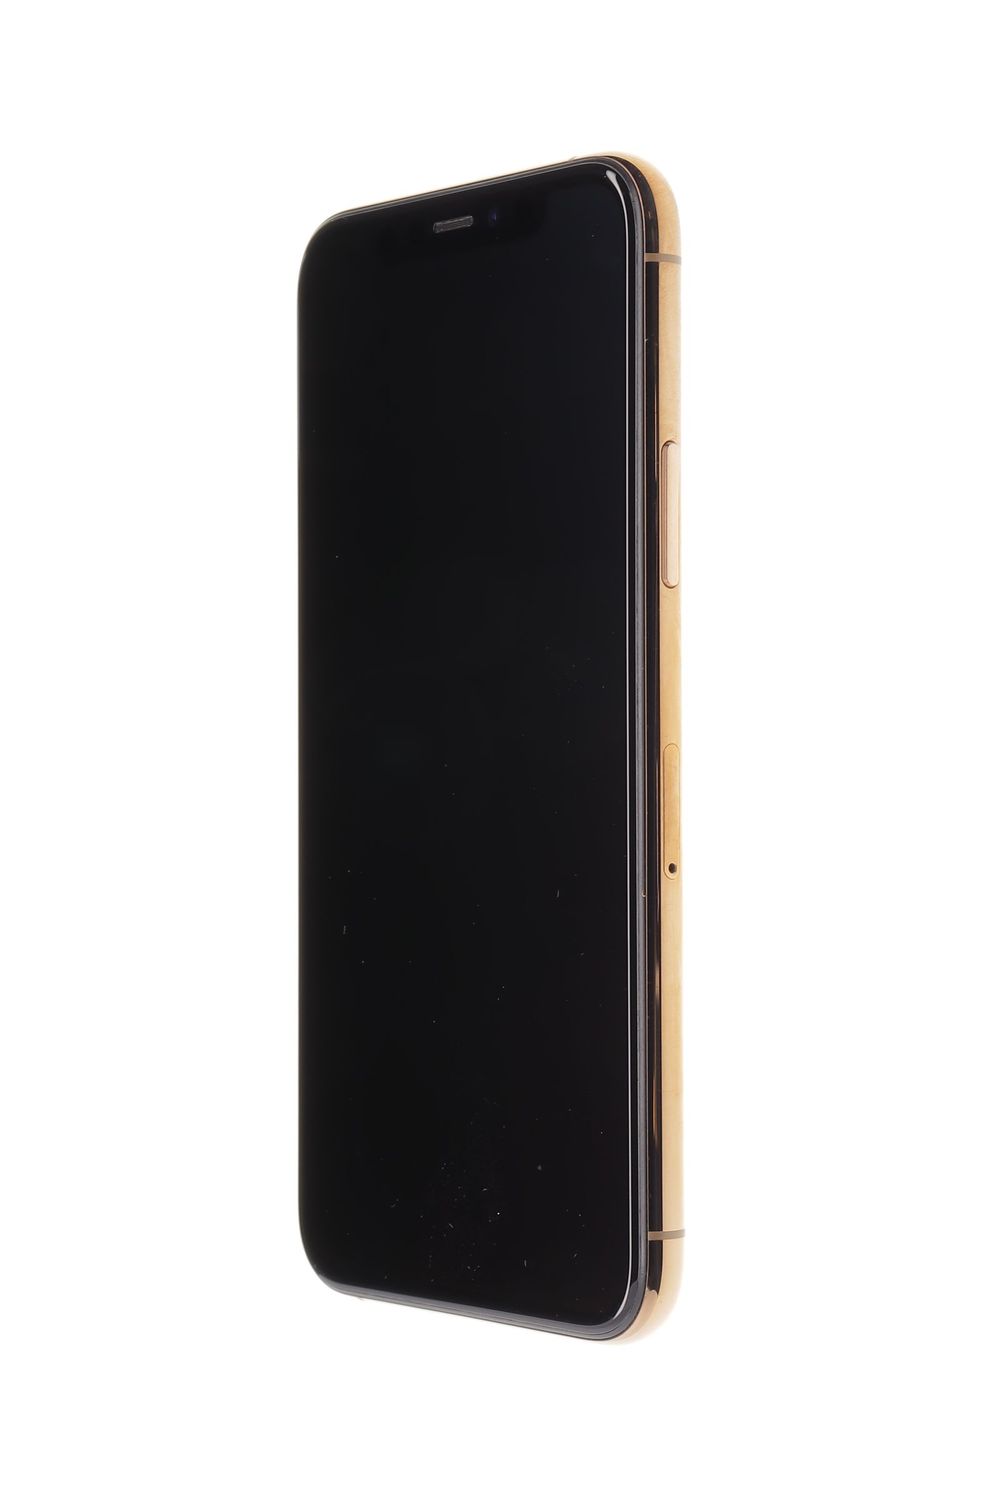 Mobiltelefon Apple iPhone 11 Pro, Gold, 64 GB, Excelent